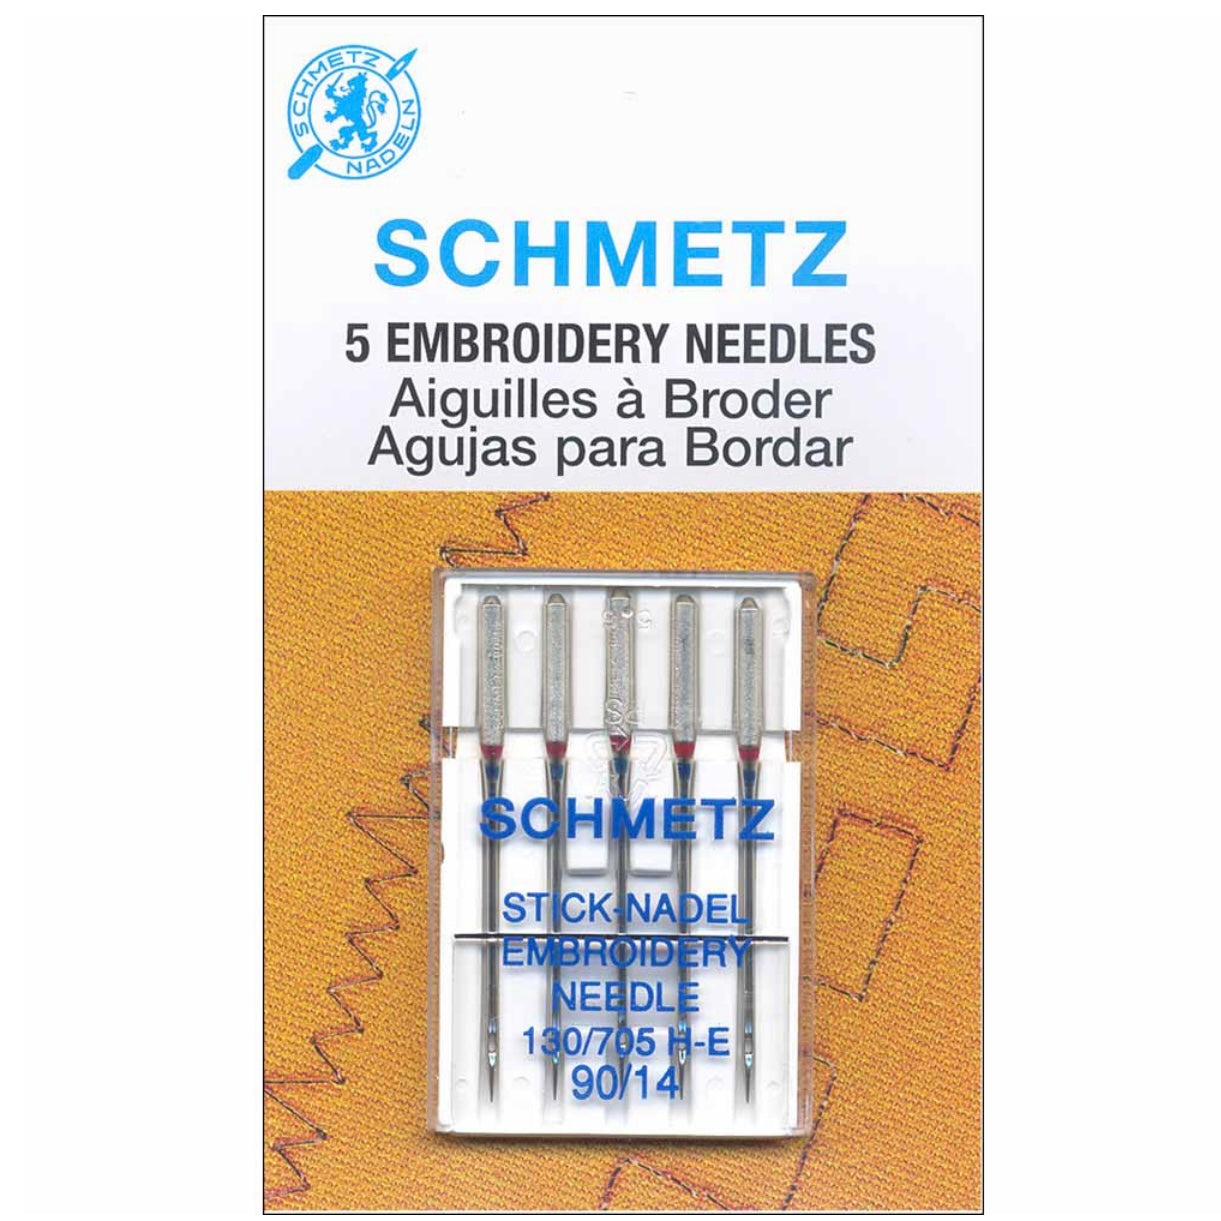 Embroidery Needles - Schmetz - 90/14 - 5 Count